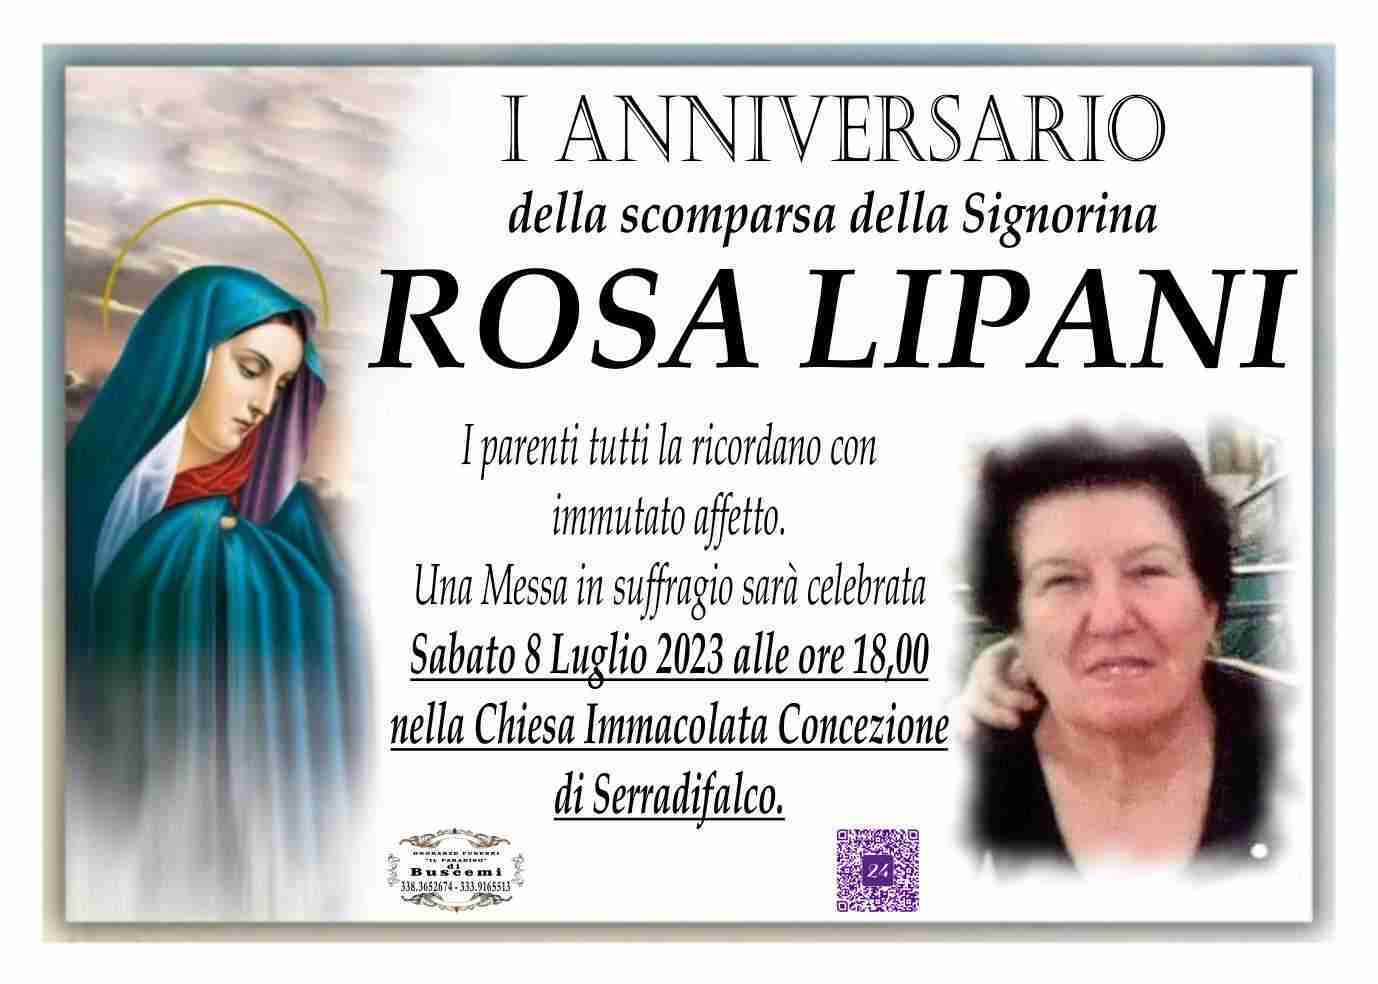 Rosa Lipani